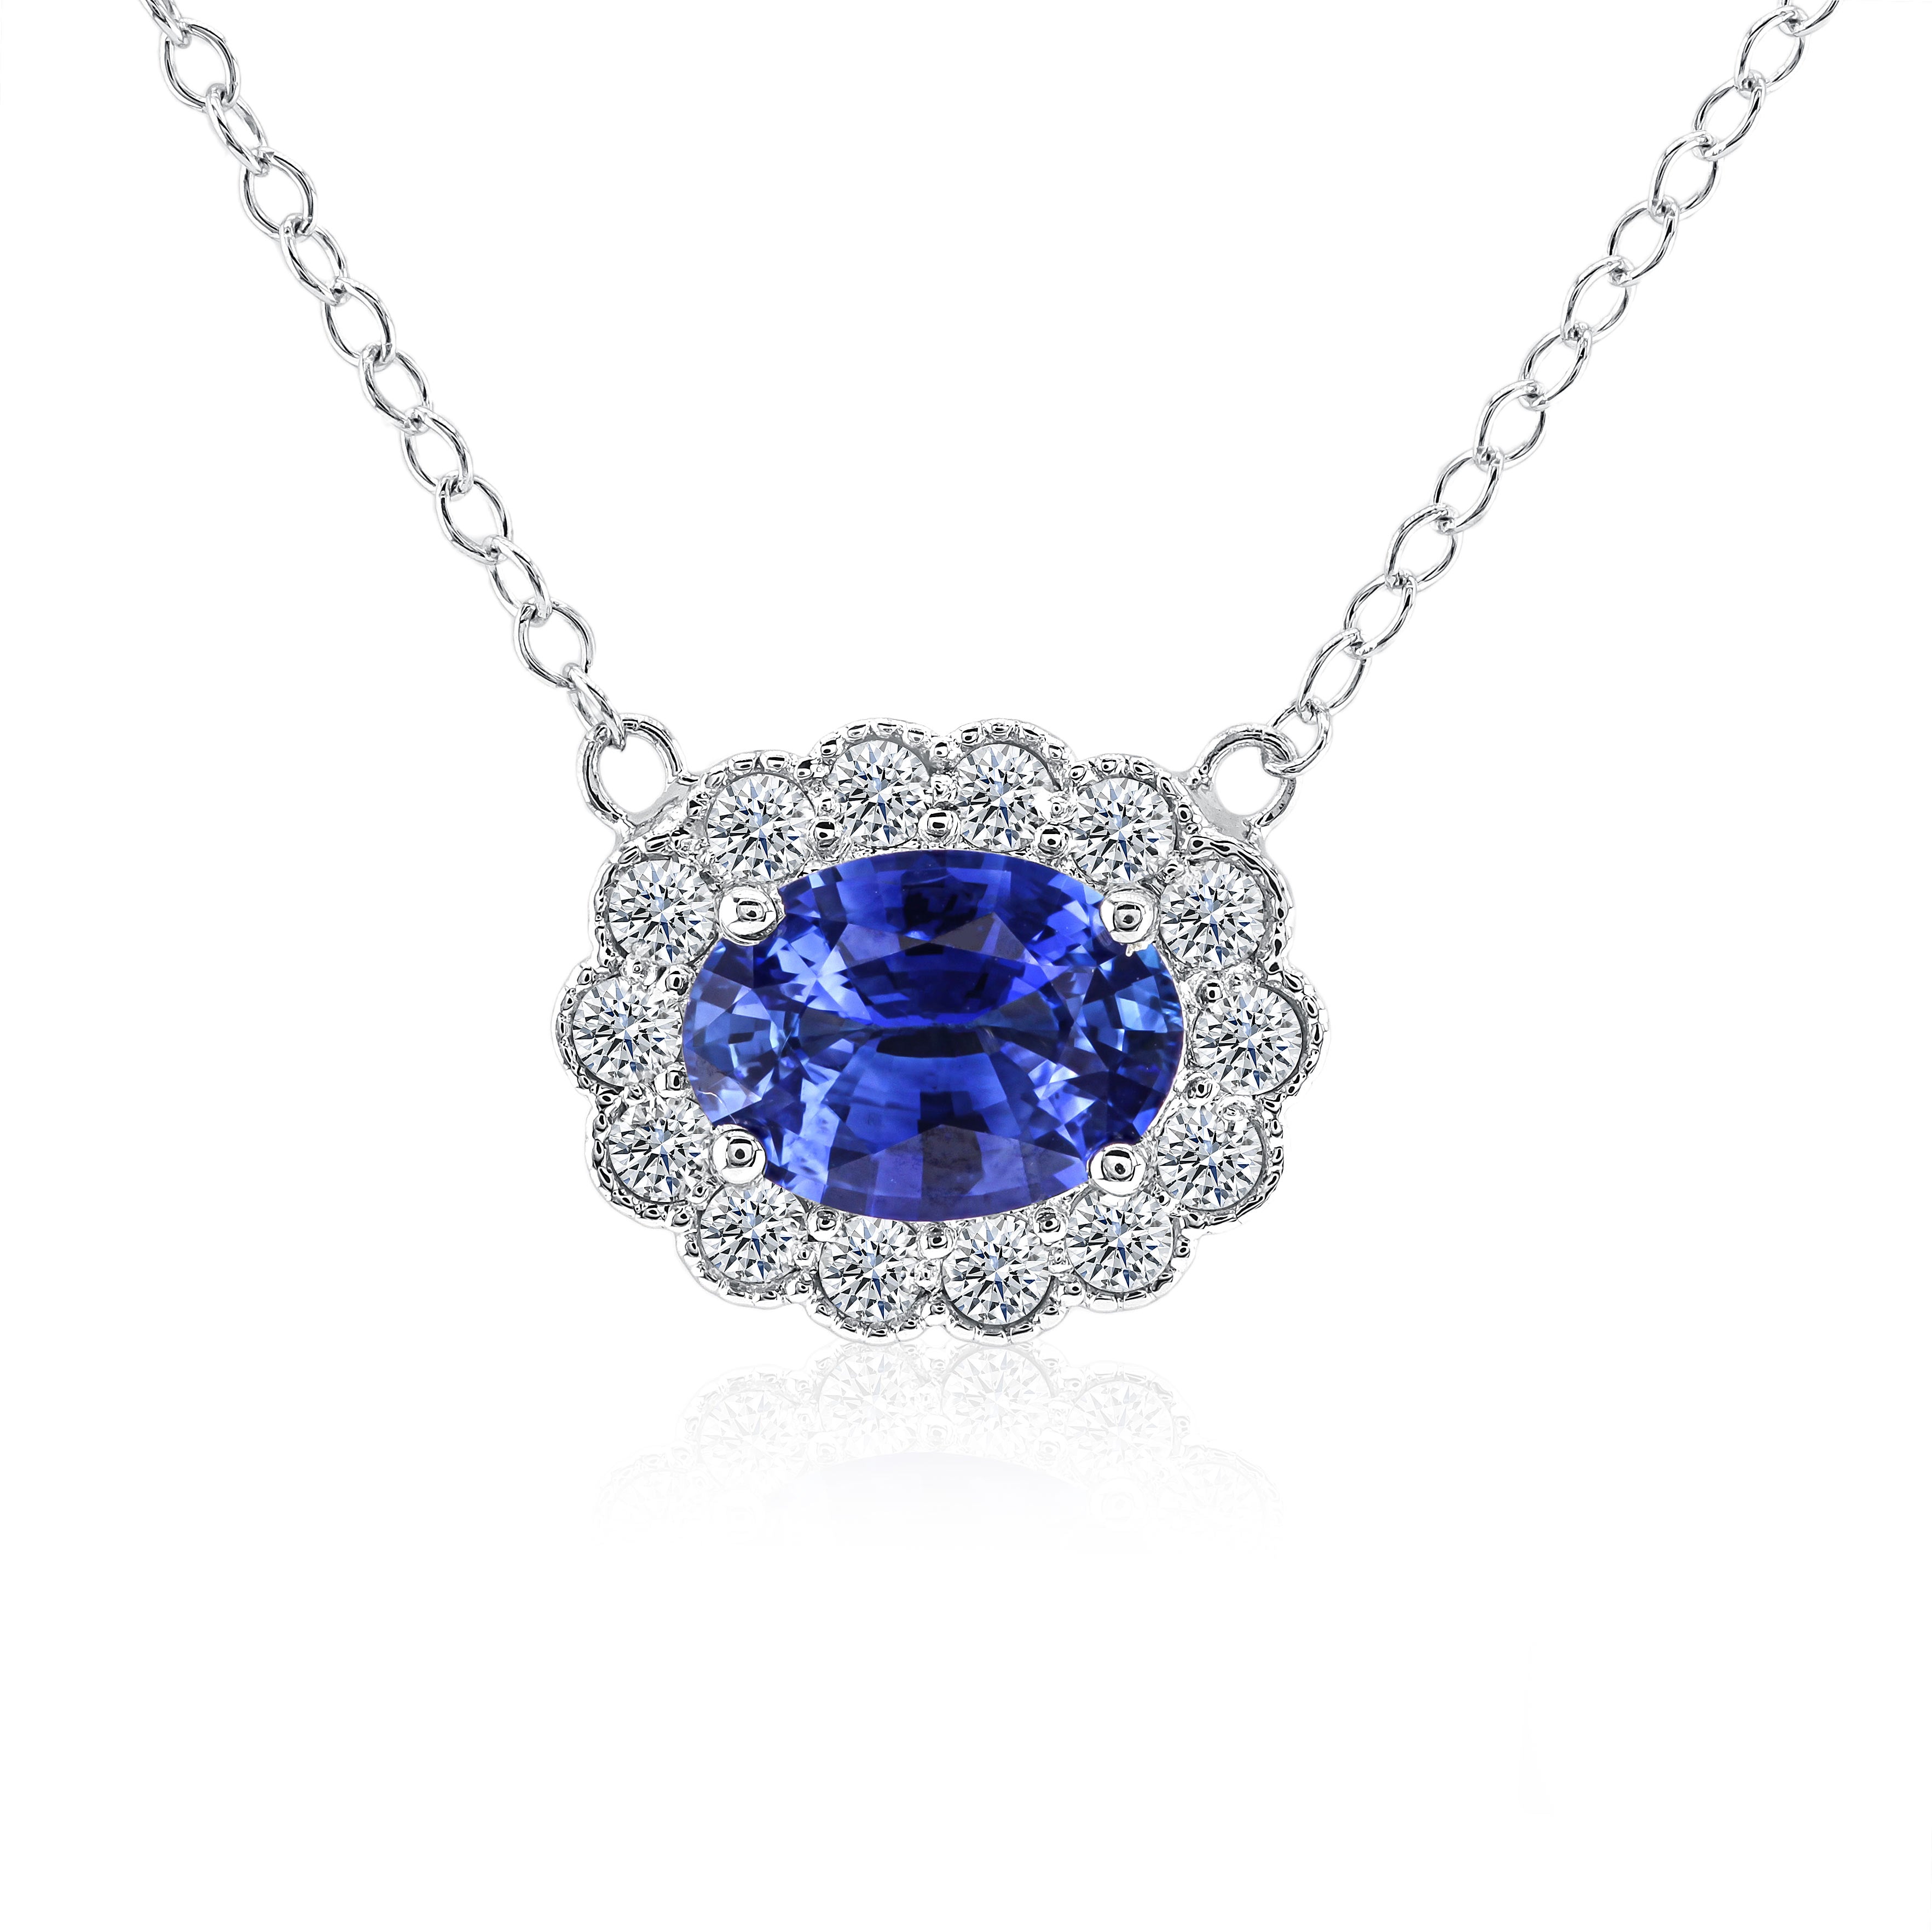 Oval Blue Sapphire Pendant Necklace